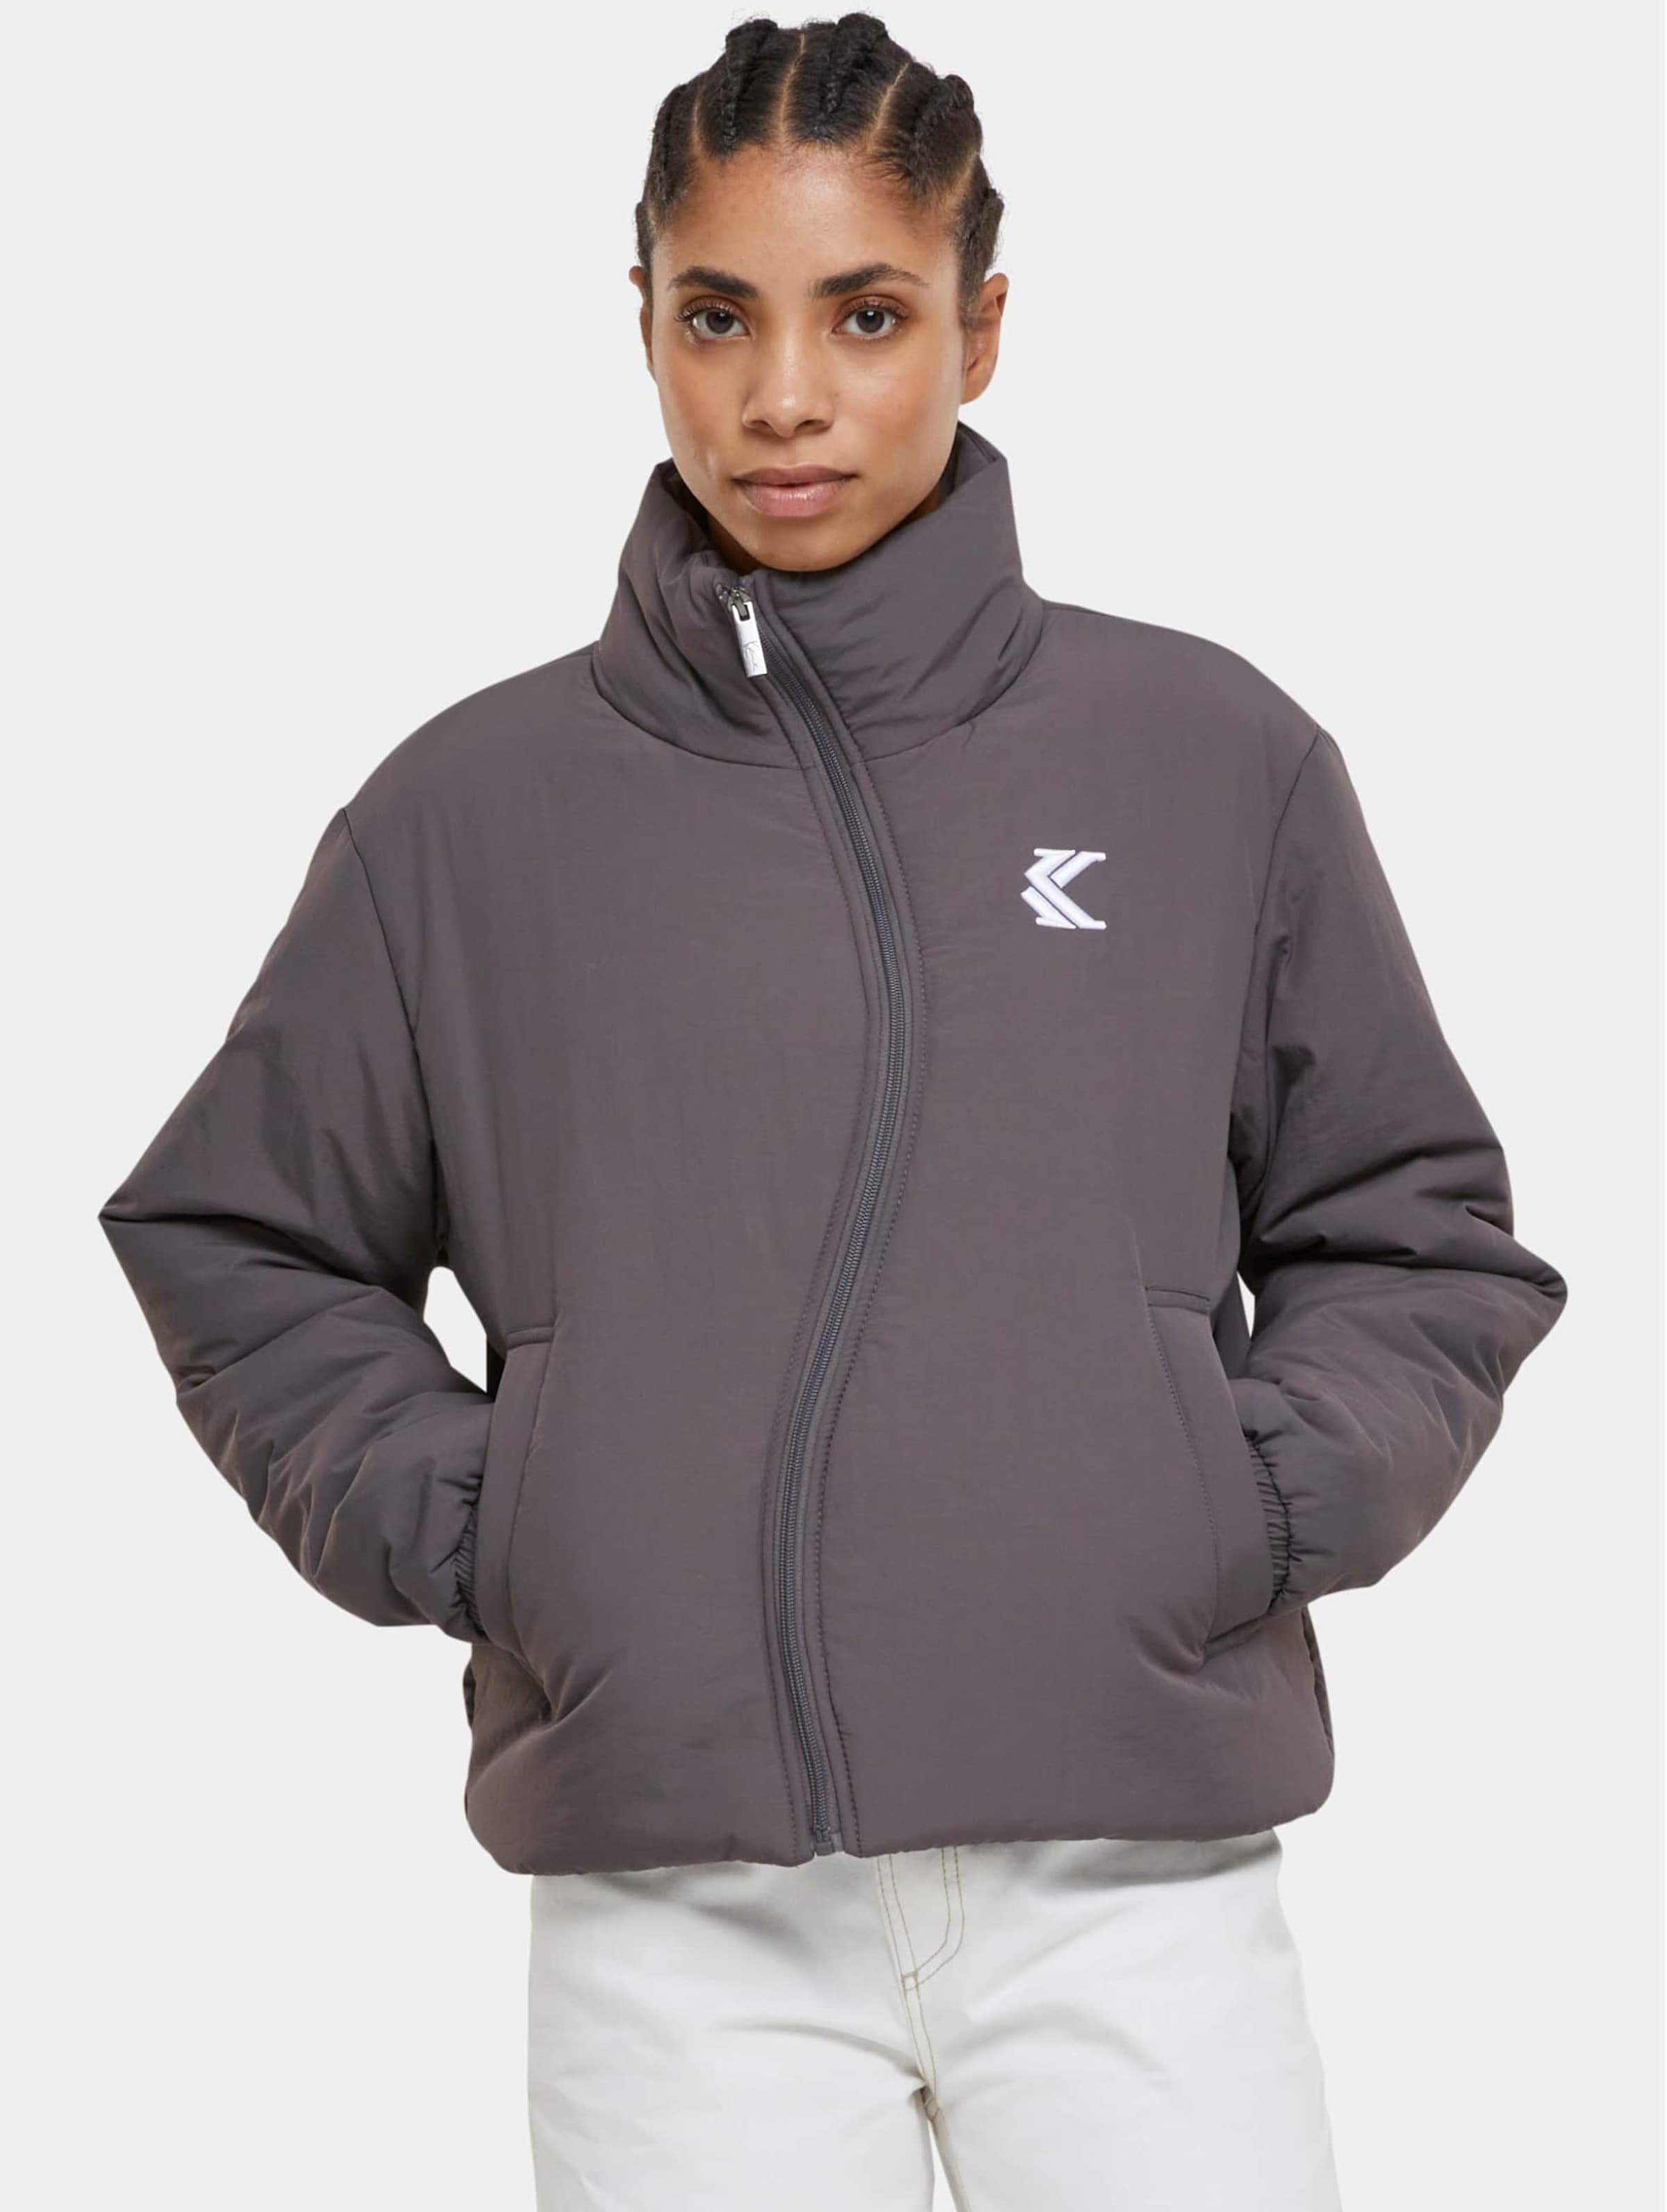 Karl Kani KW233-051-2 KK OG Wavy Puffer Jacket Vrouwen op kleur grijs, Maat M